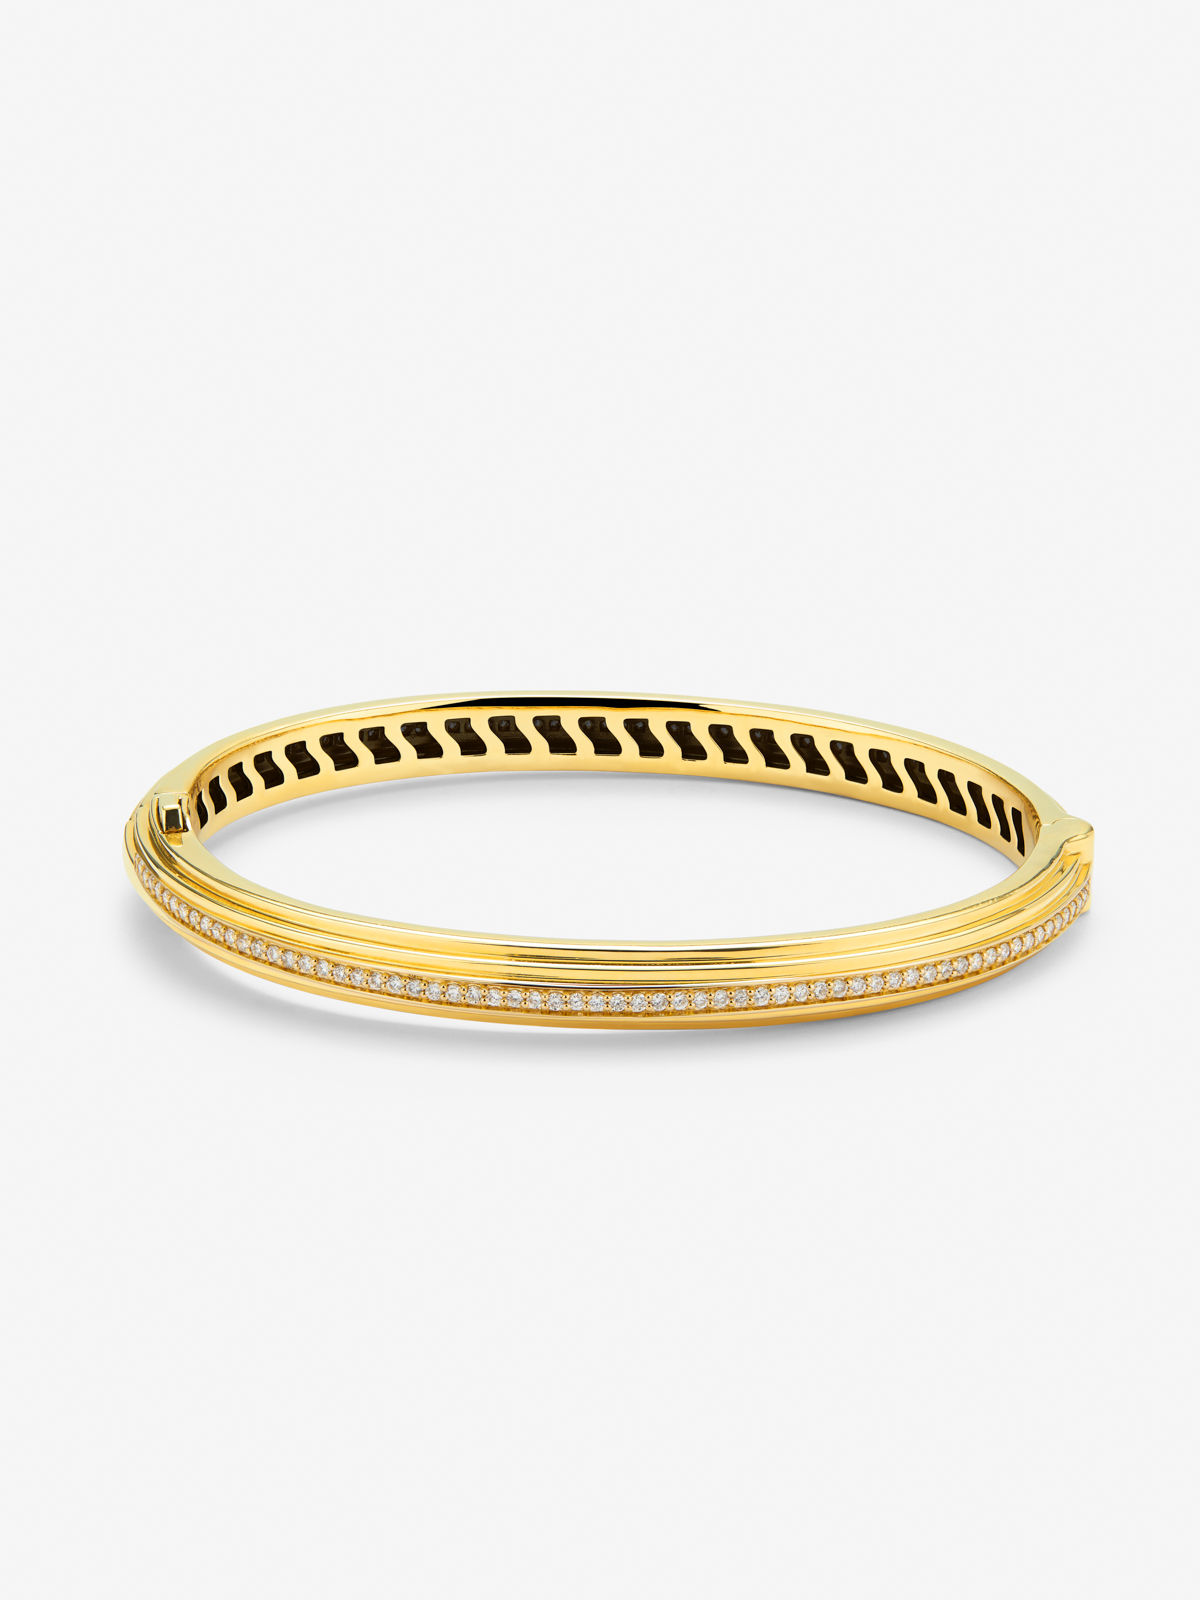 Rigid 18K yellow gold bracelet with 0.42 ct brilliant cut diamonds